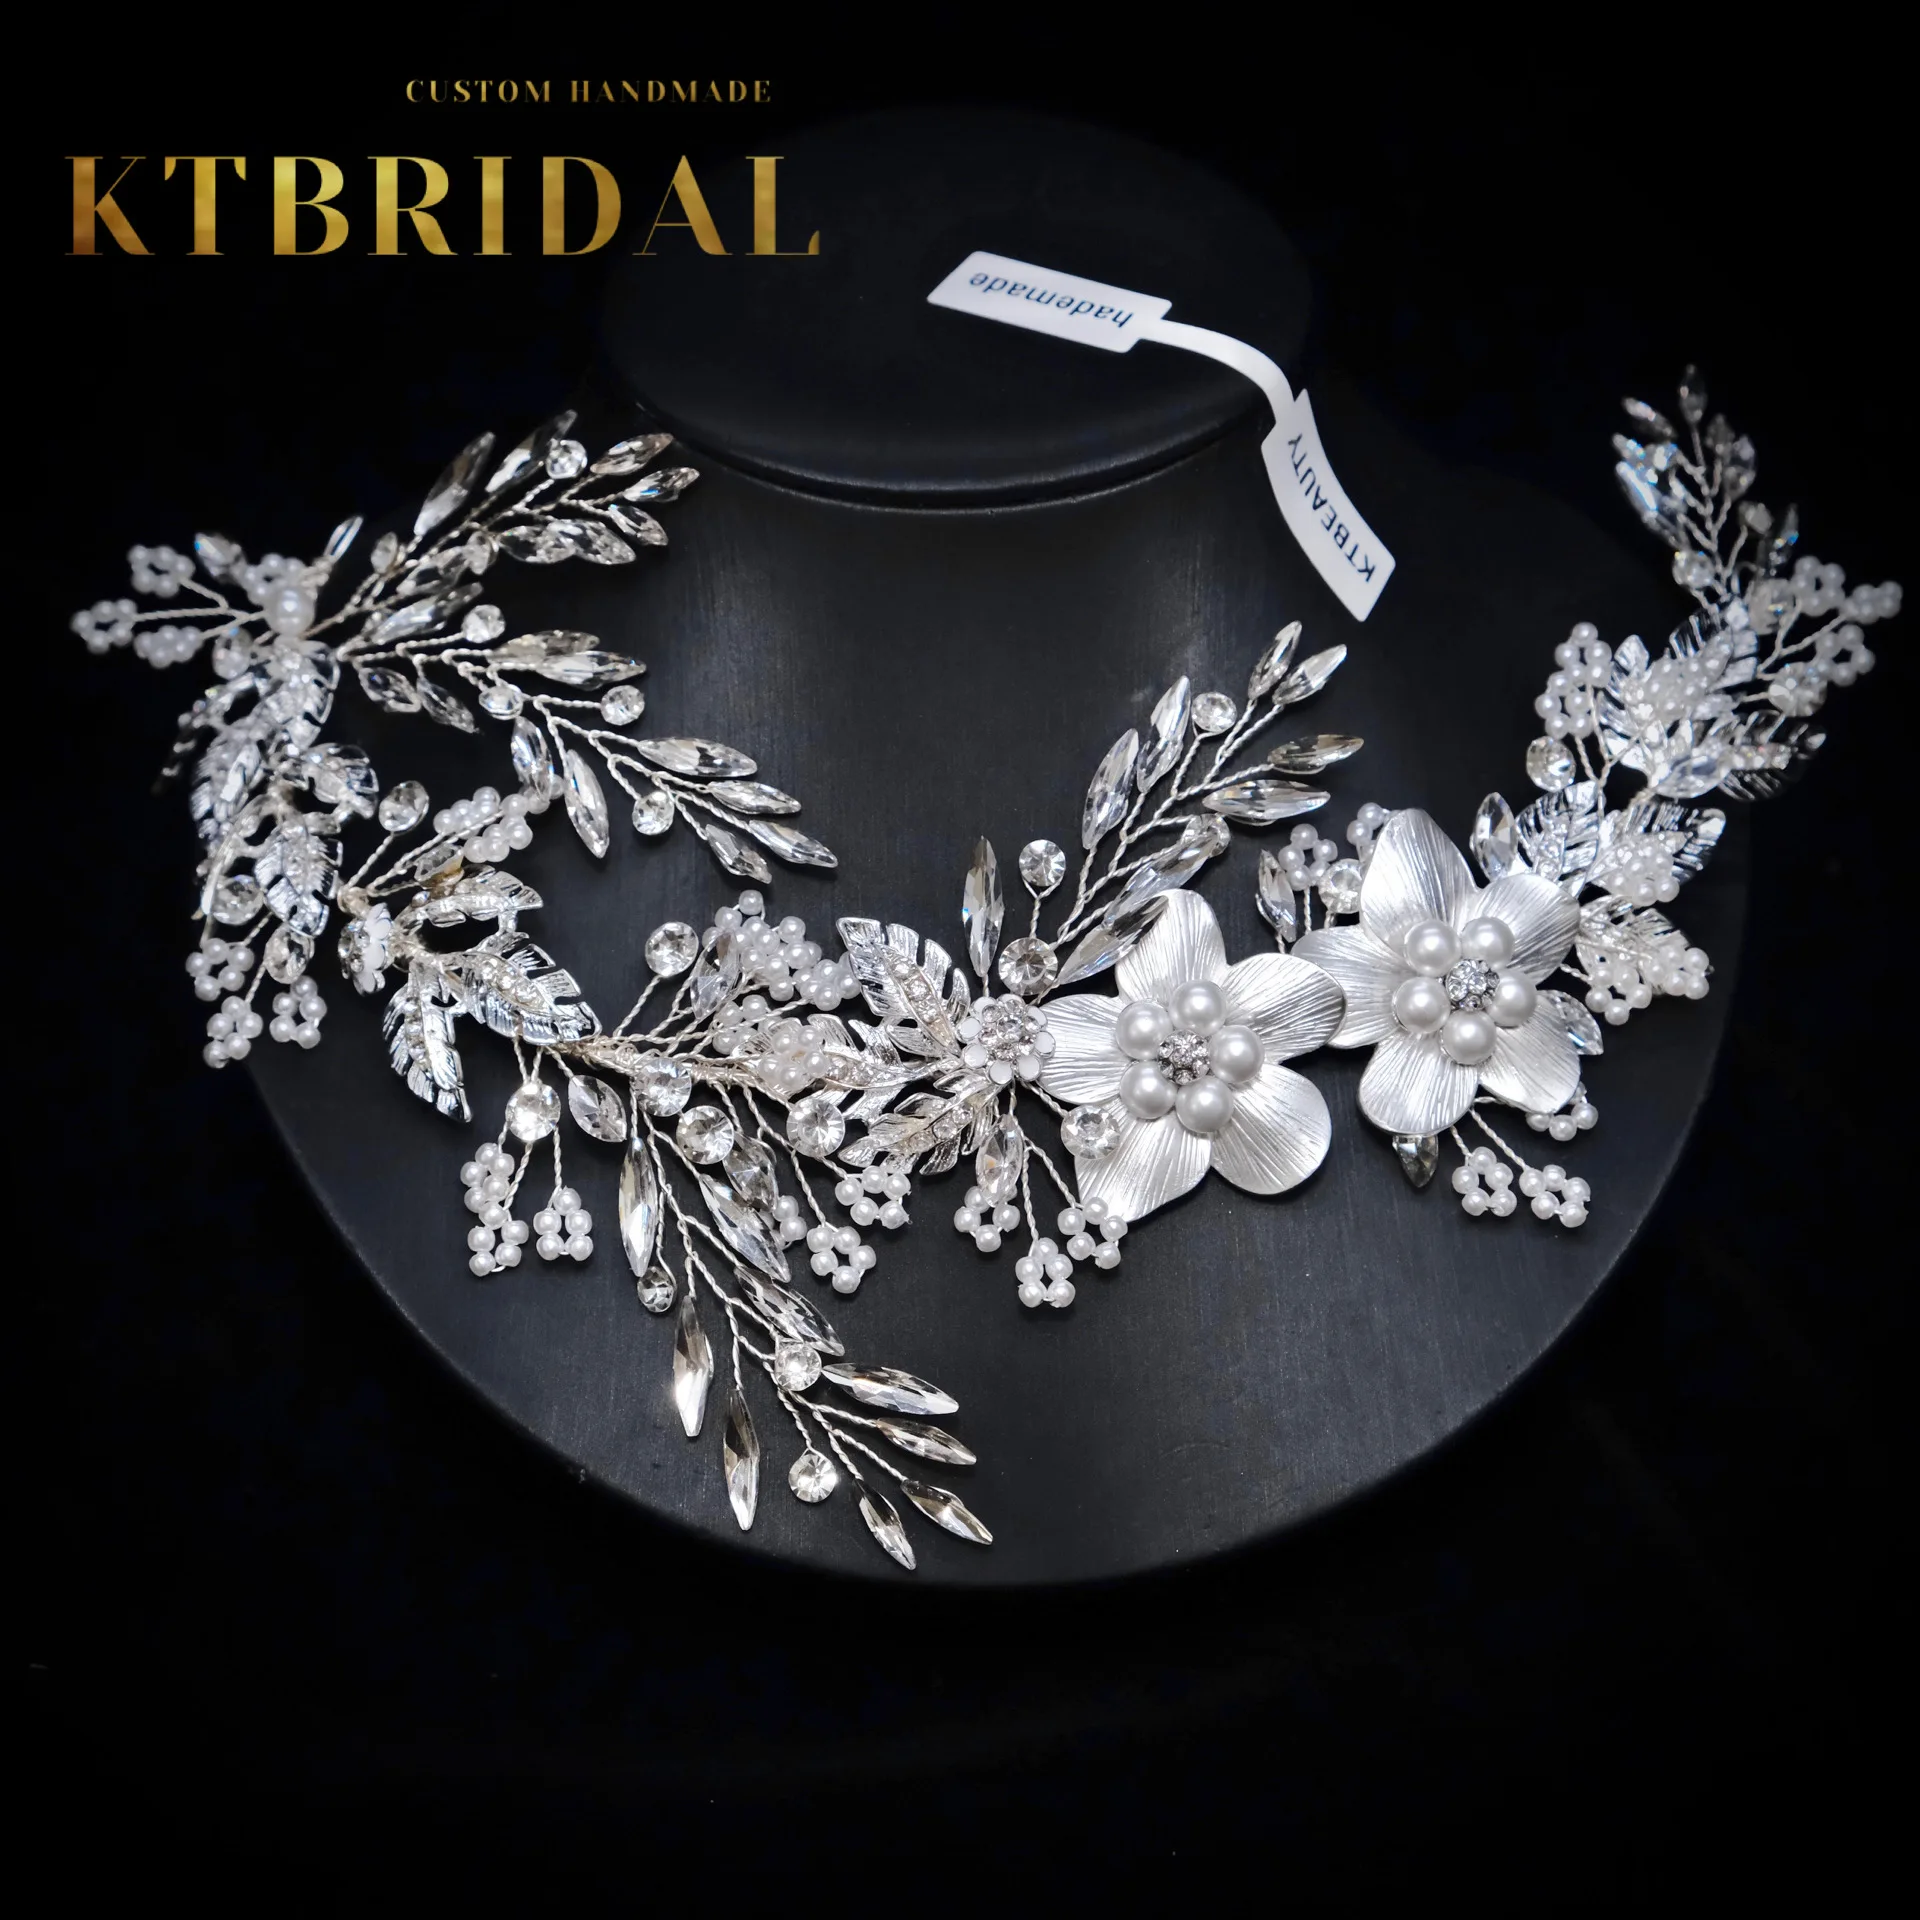 

New KTBRIDAL Tiara Handmade Bridal Headpieces Crystal Leavesl Fashion Jewelry Women Gift Wedding Accessiories